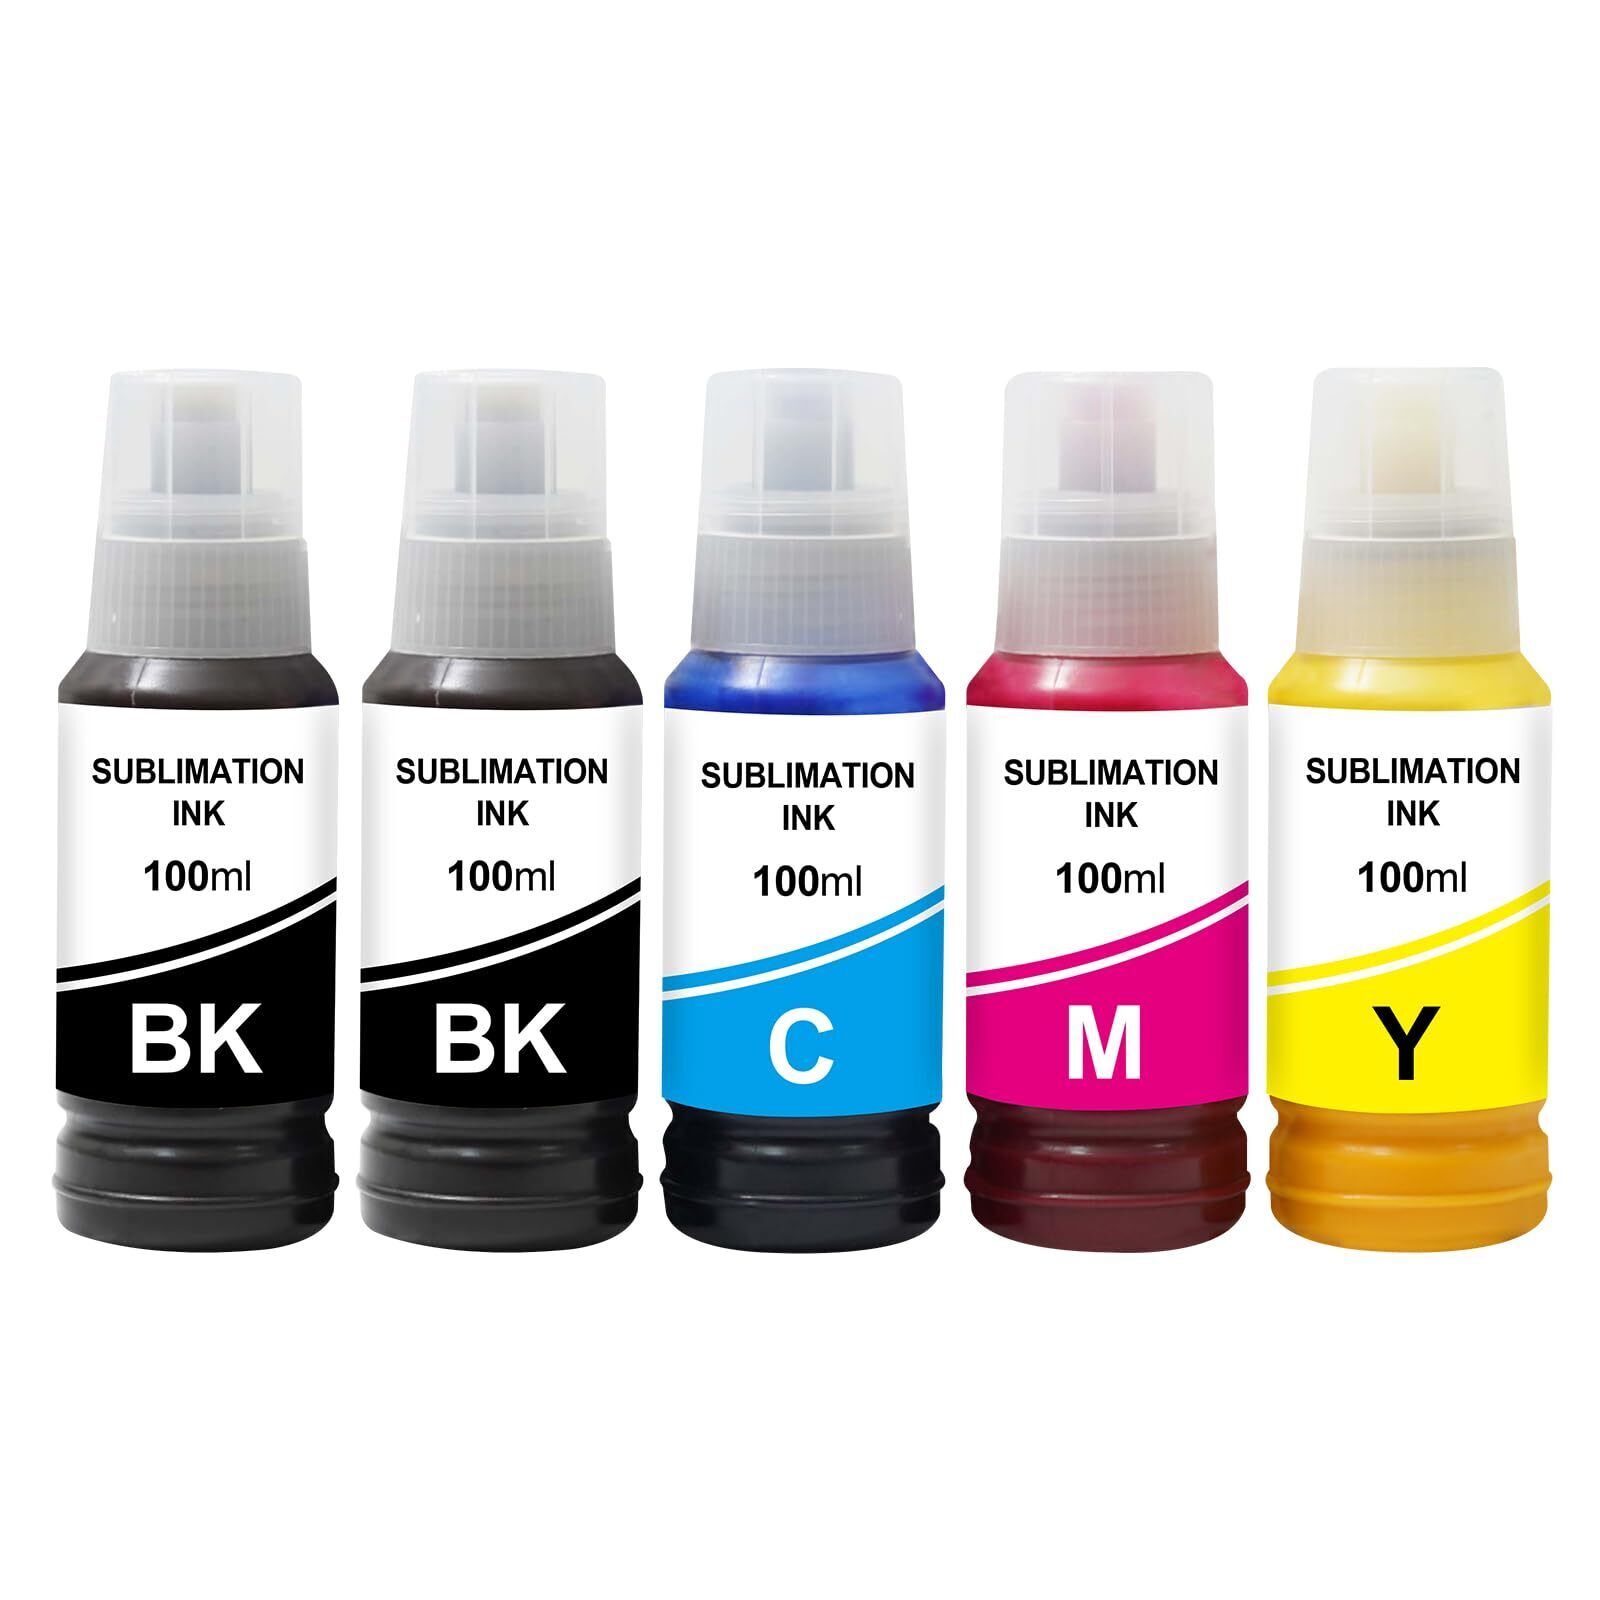 Sublimation Ink Refill for Epson EcoTank T502 T522 ET2720 2760 15000 - 5 Pack